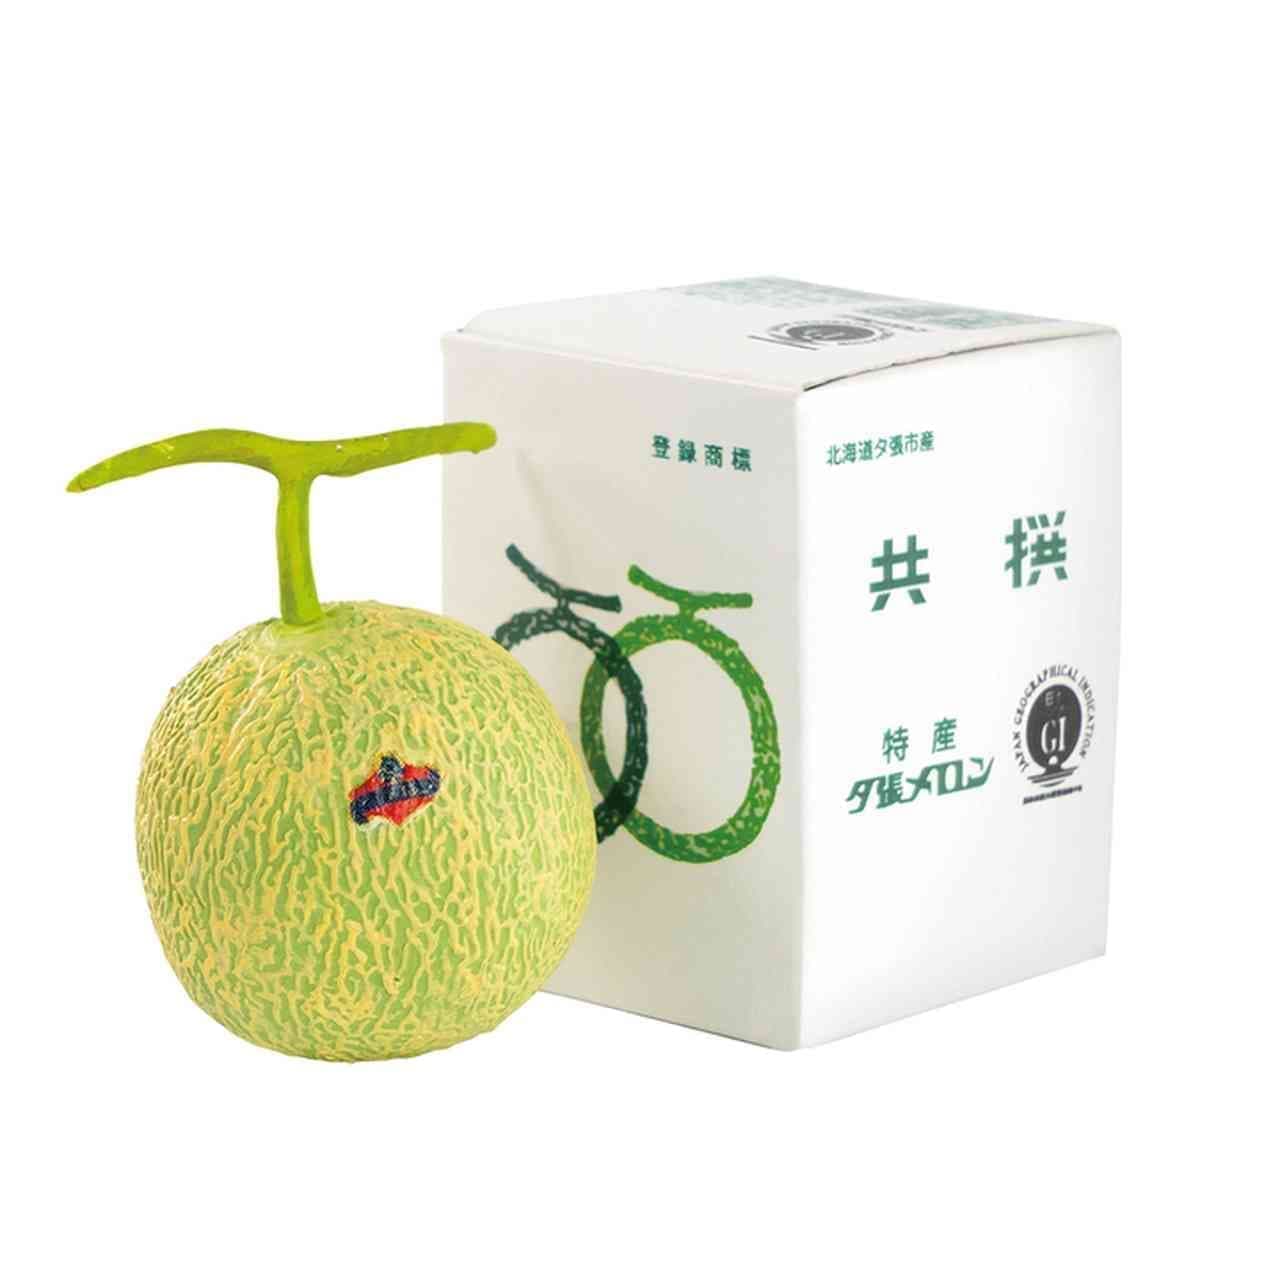 Capsule Toy "Miniature Hokkaido" Yubari Melon